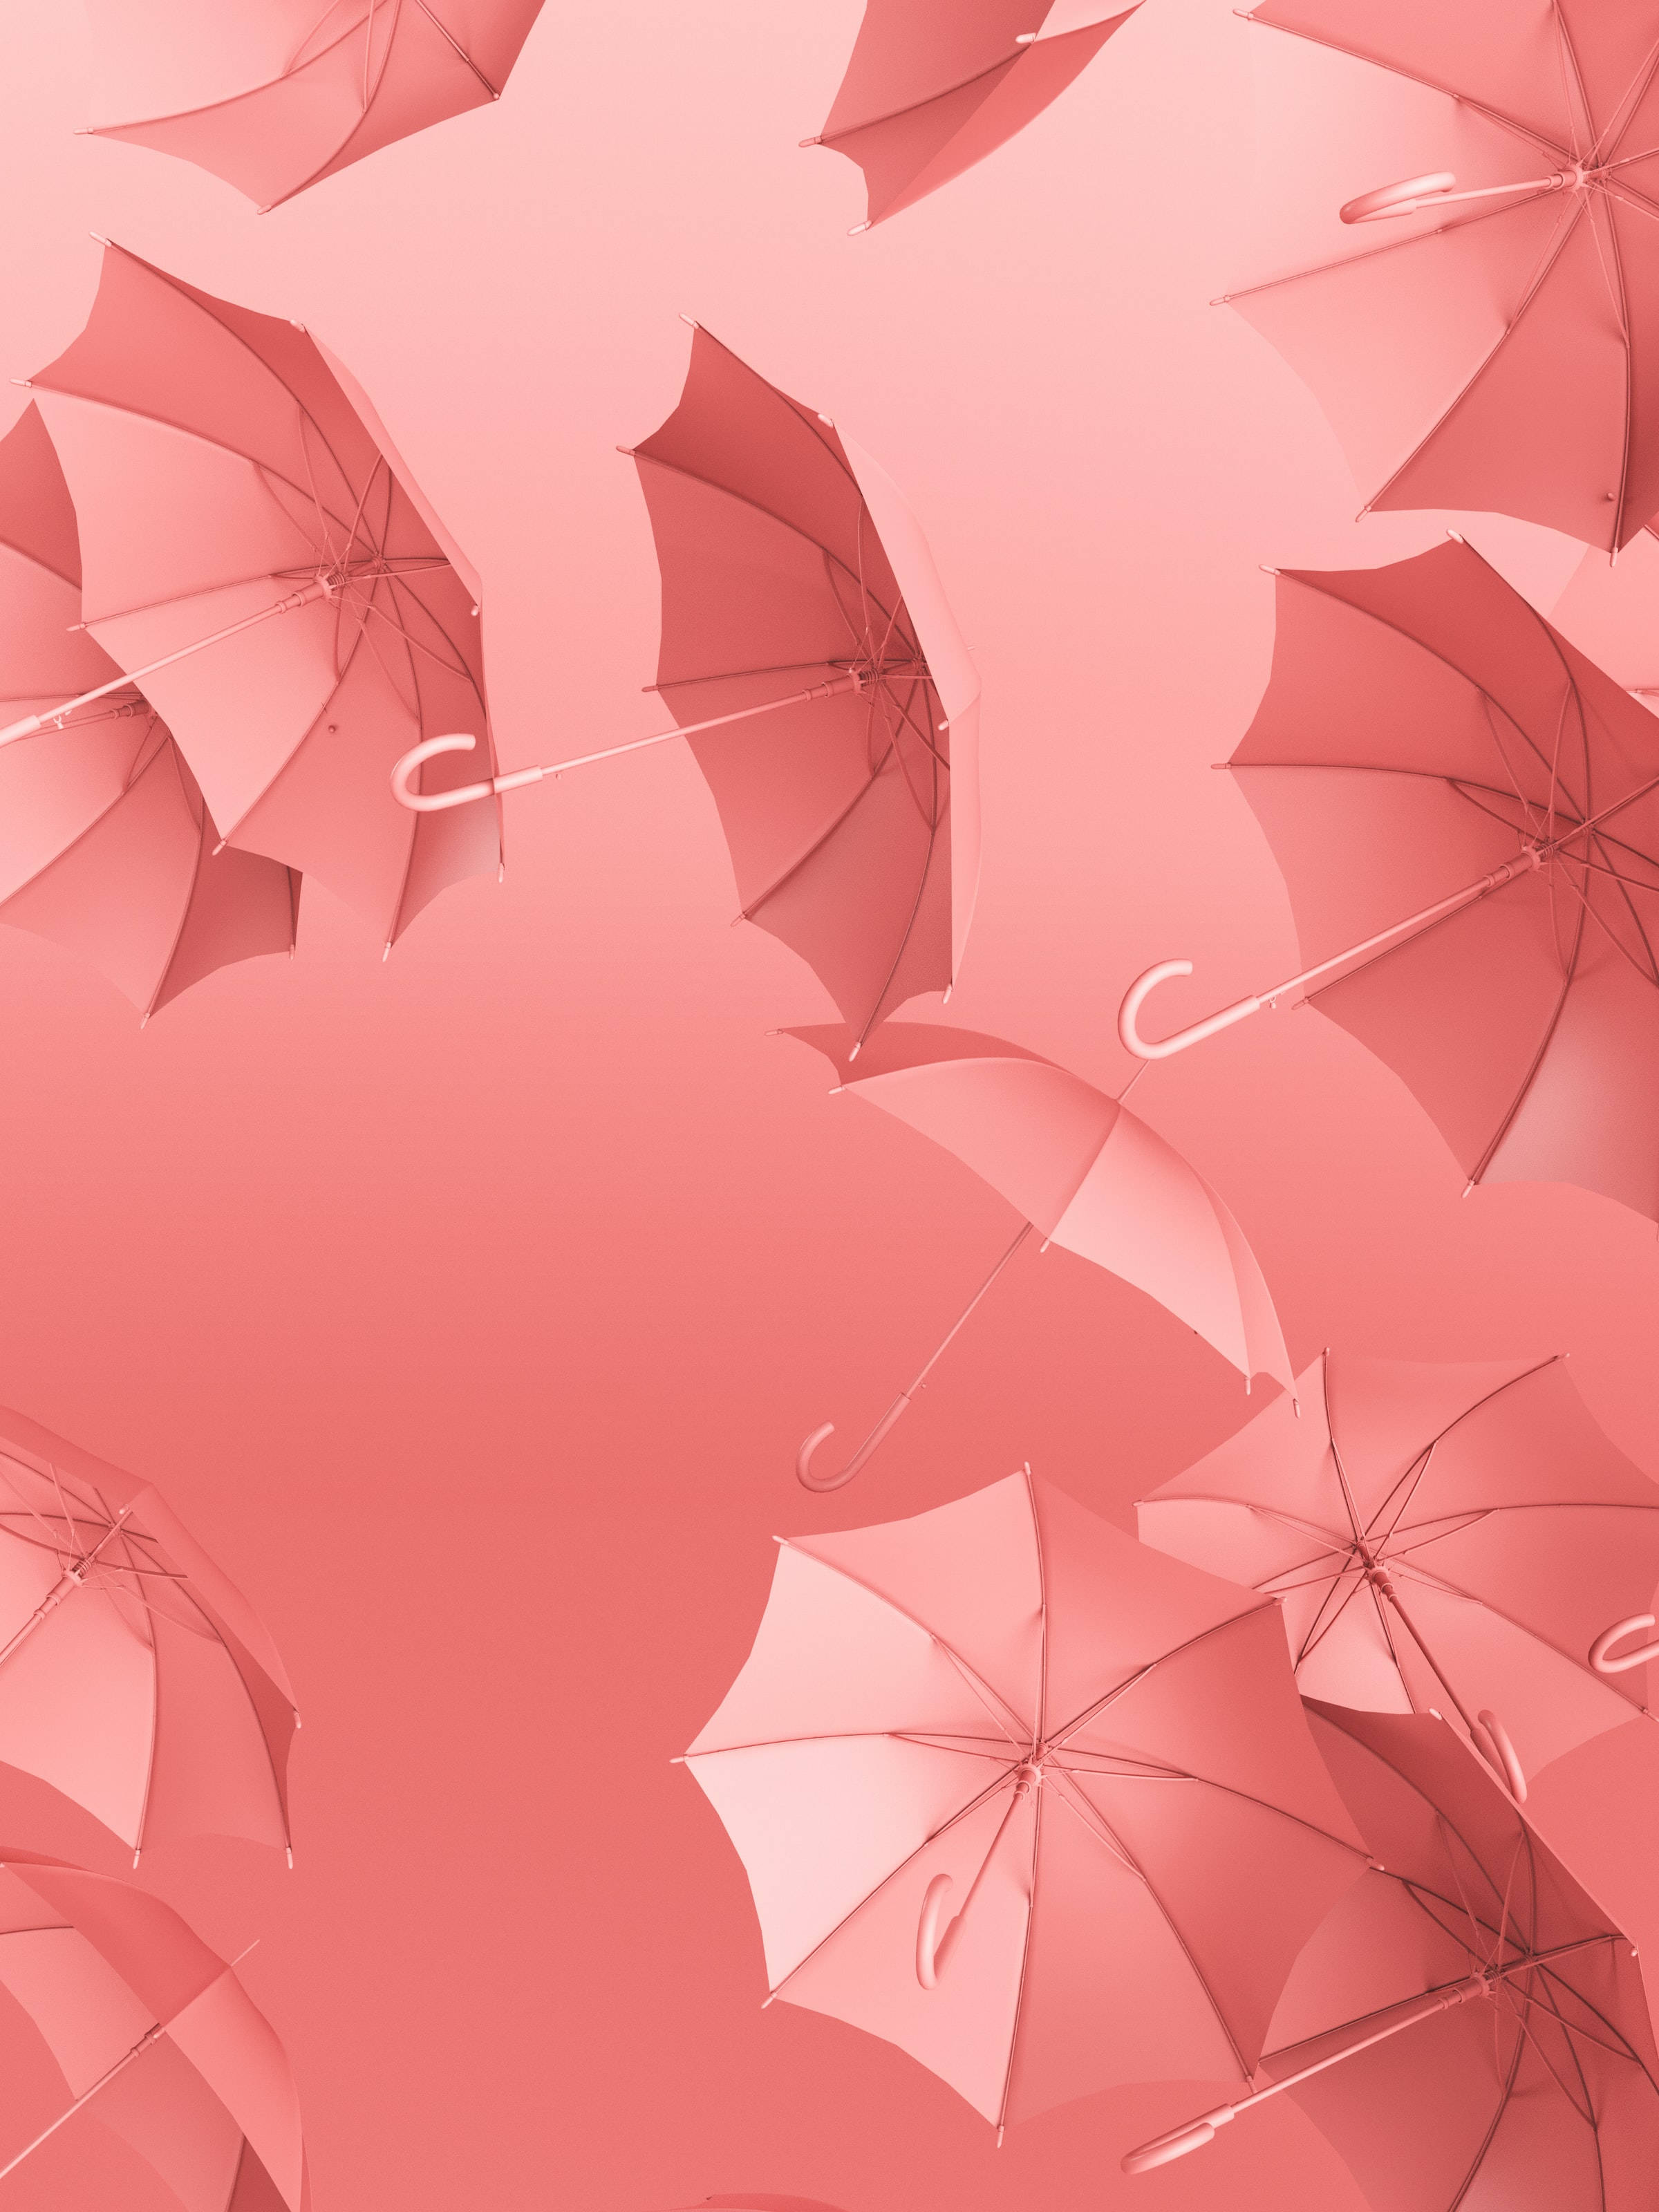 Cute Pink Aesthetic Floating Umbrellas Wallpaper